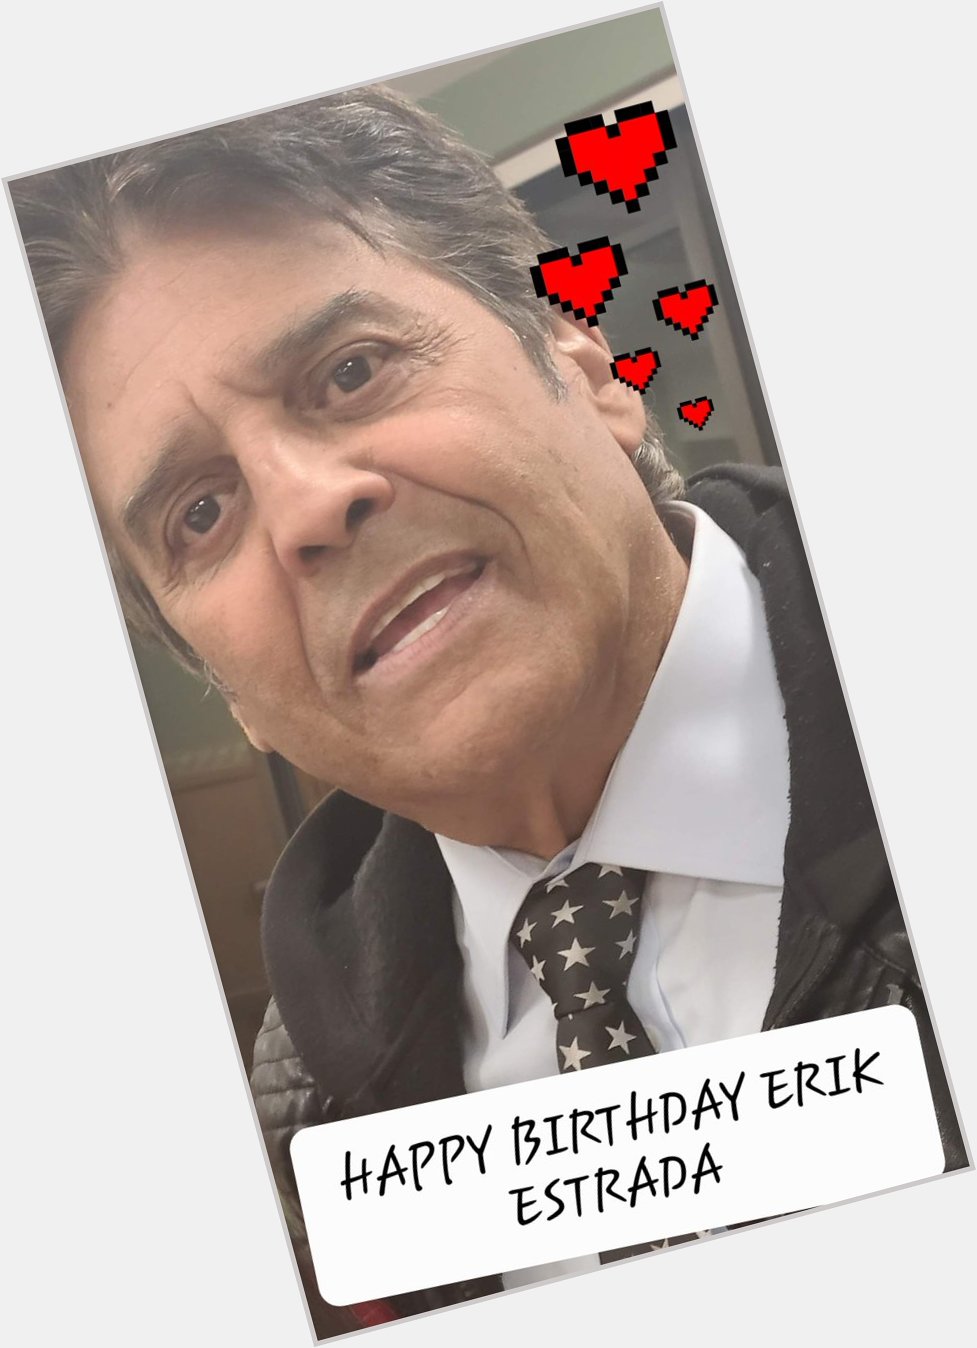  Happy birthday Erik Estrada 